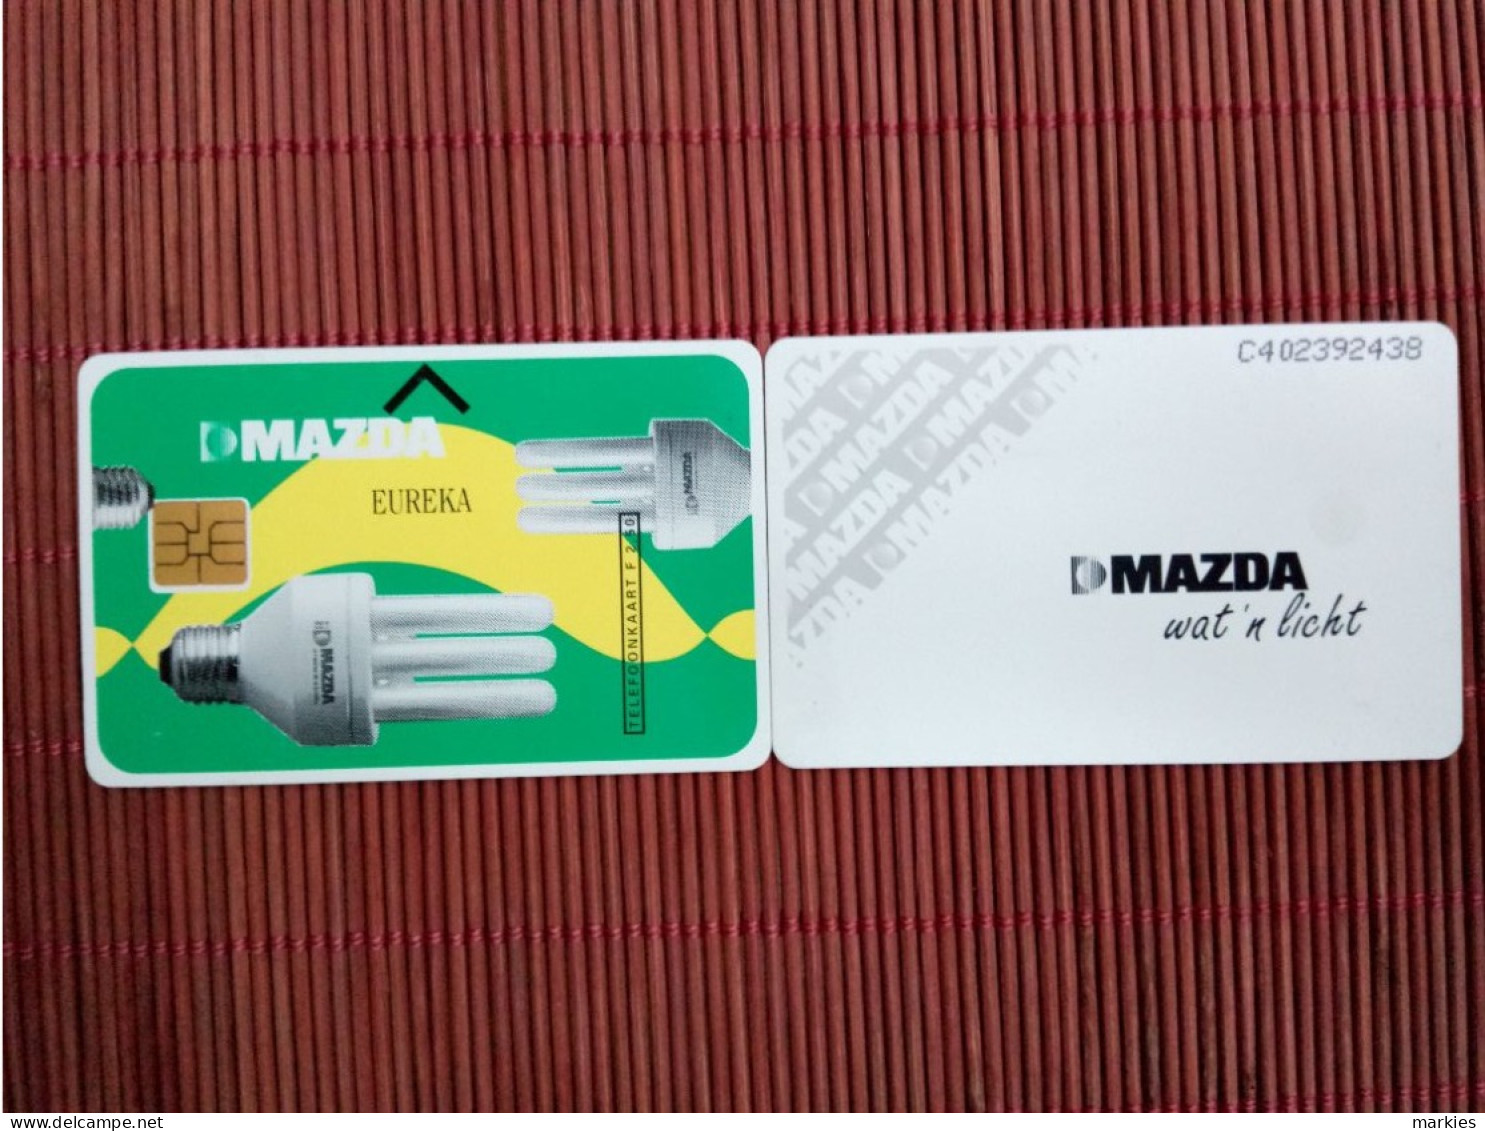 1 Phonecard Pricte Netherlands Mazda (Mint,Neuve)Rare - Private